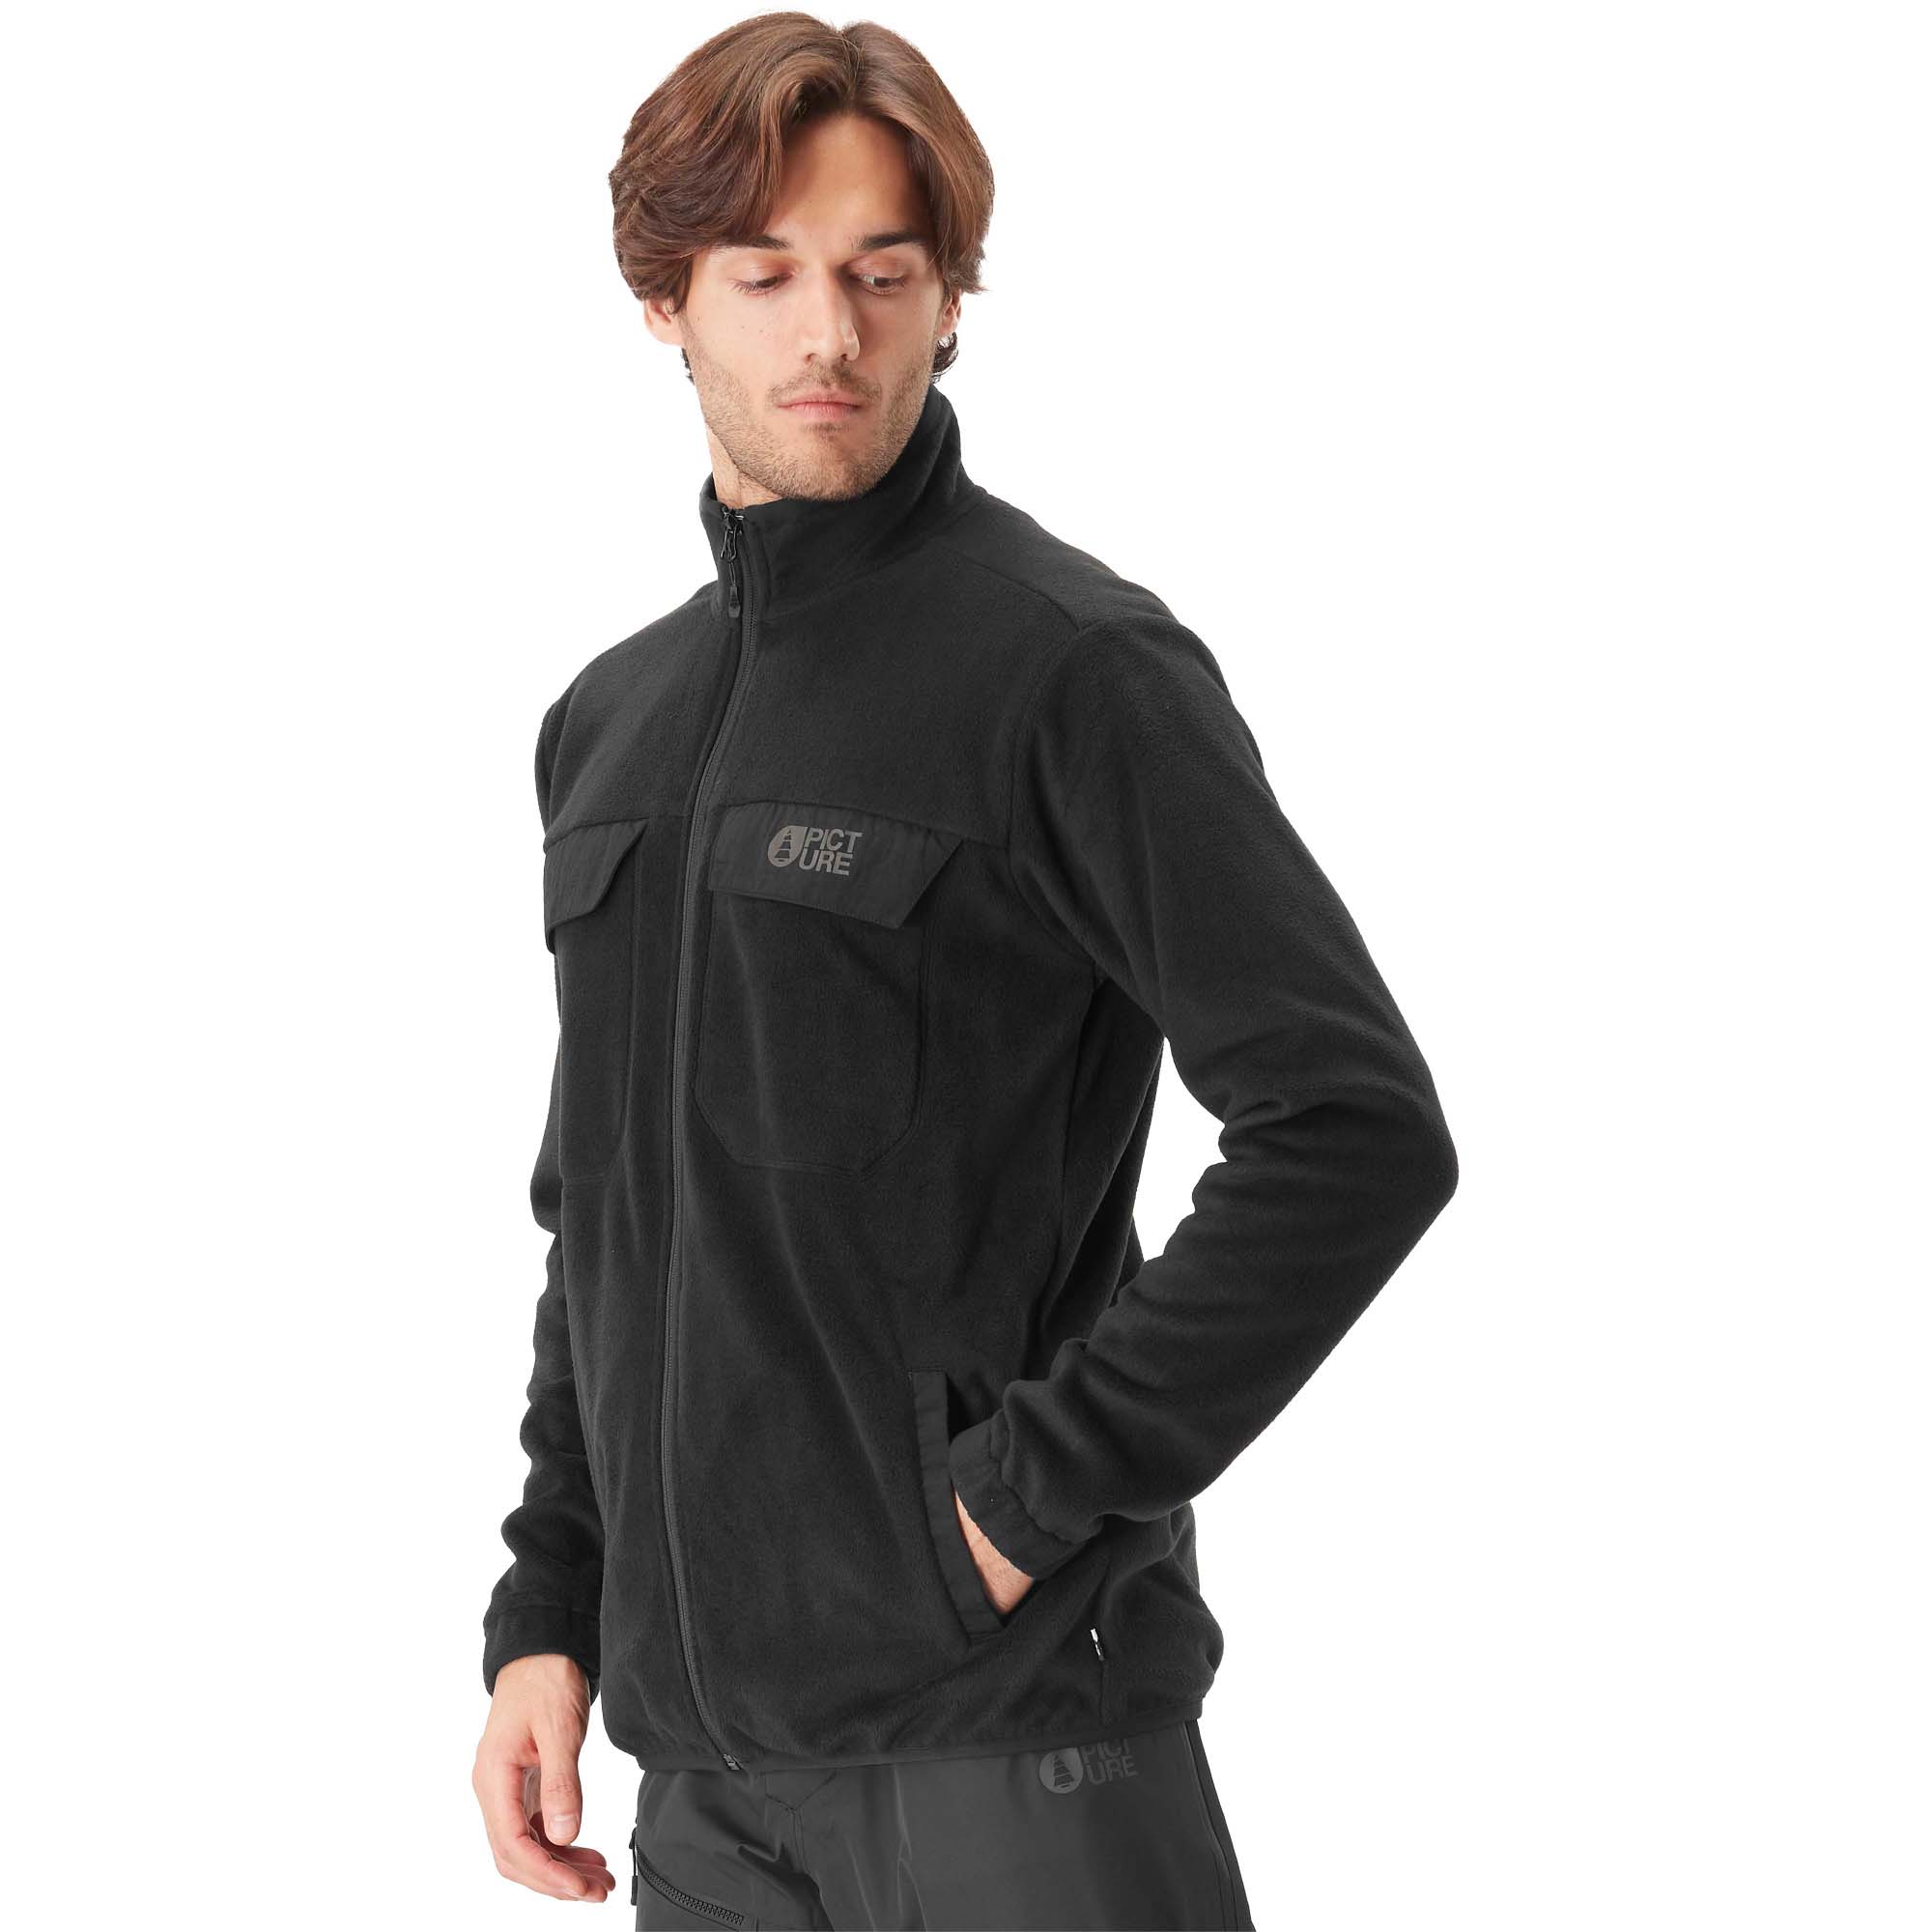 Photos - Trekking Clothes Picture Artim FZ Men's Technical Fleece Jacket, S Black SMT117 